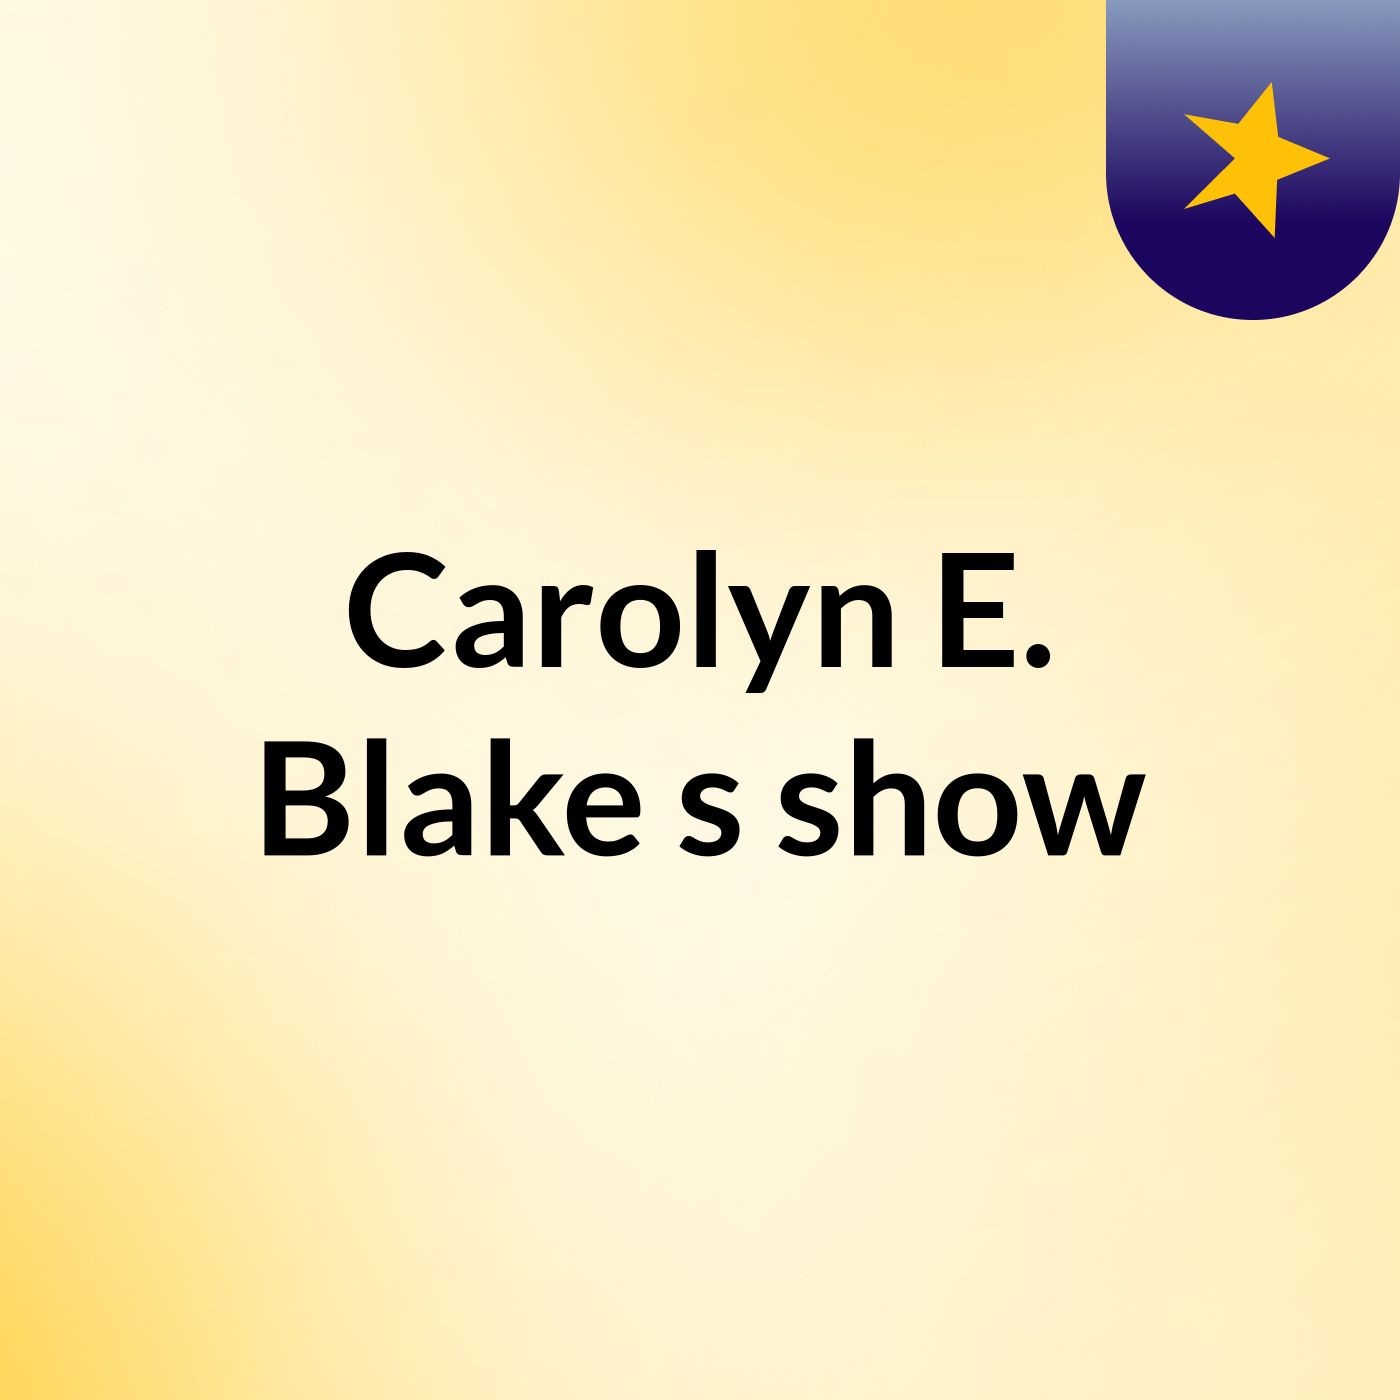 Carolyn E. Blake's show